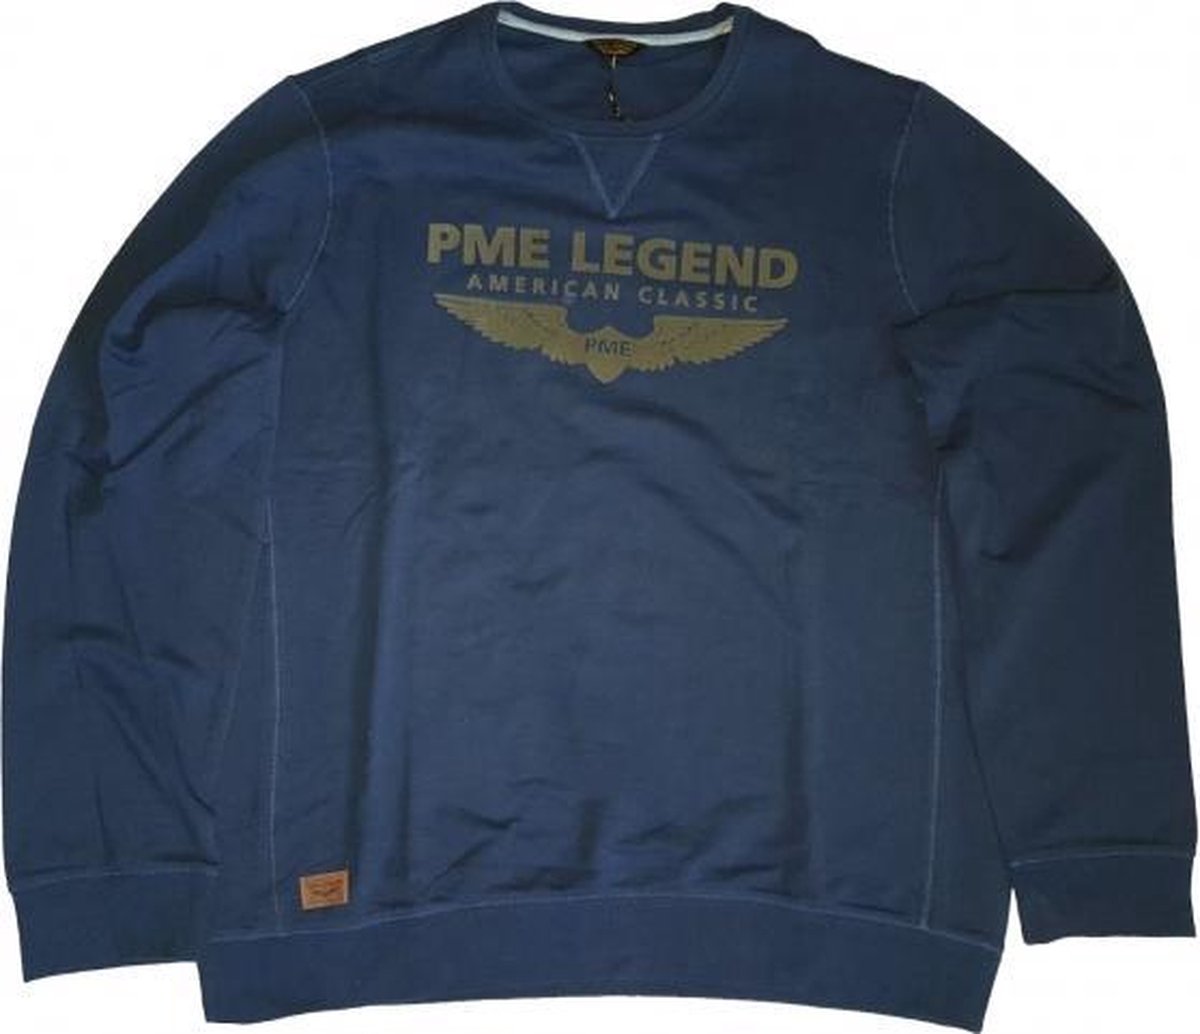 Pme legend dunnere blauwe sweater Maat - XL | bol